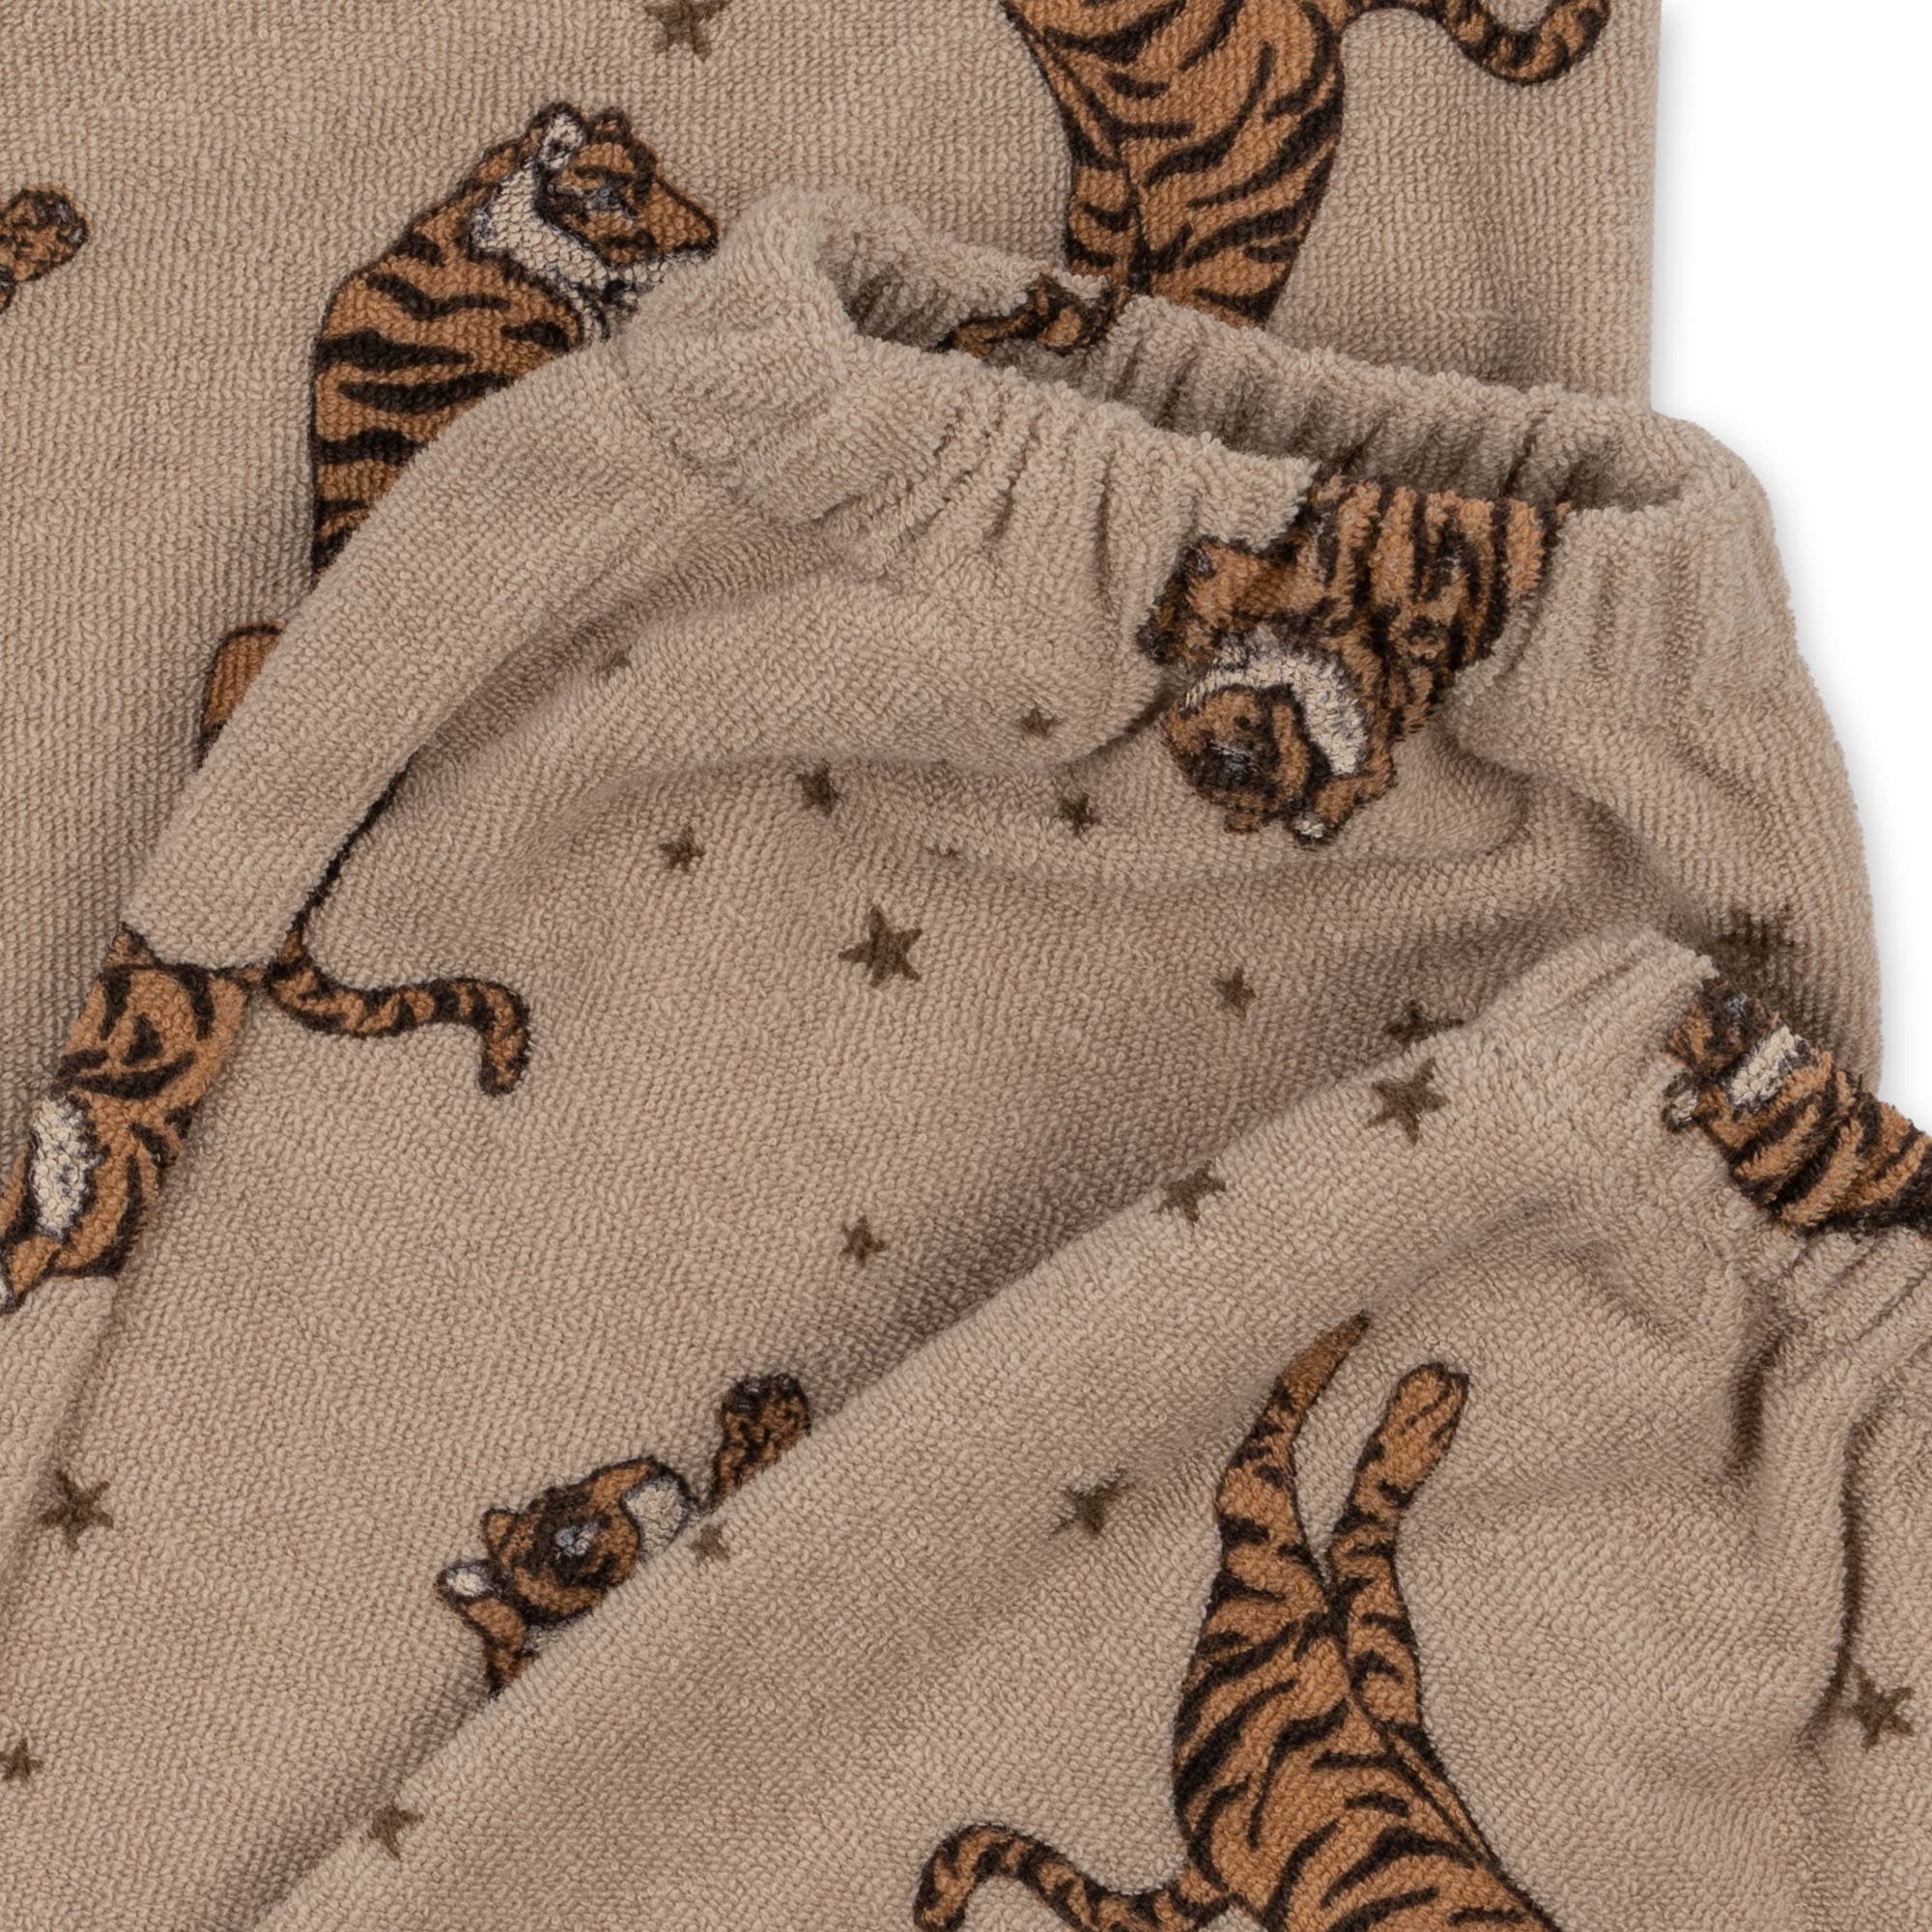 Itty Sweatshirt Set (Tiger Sand)